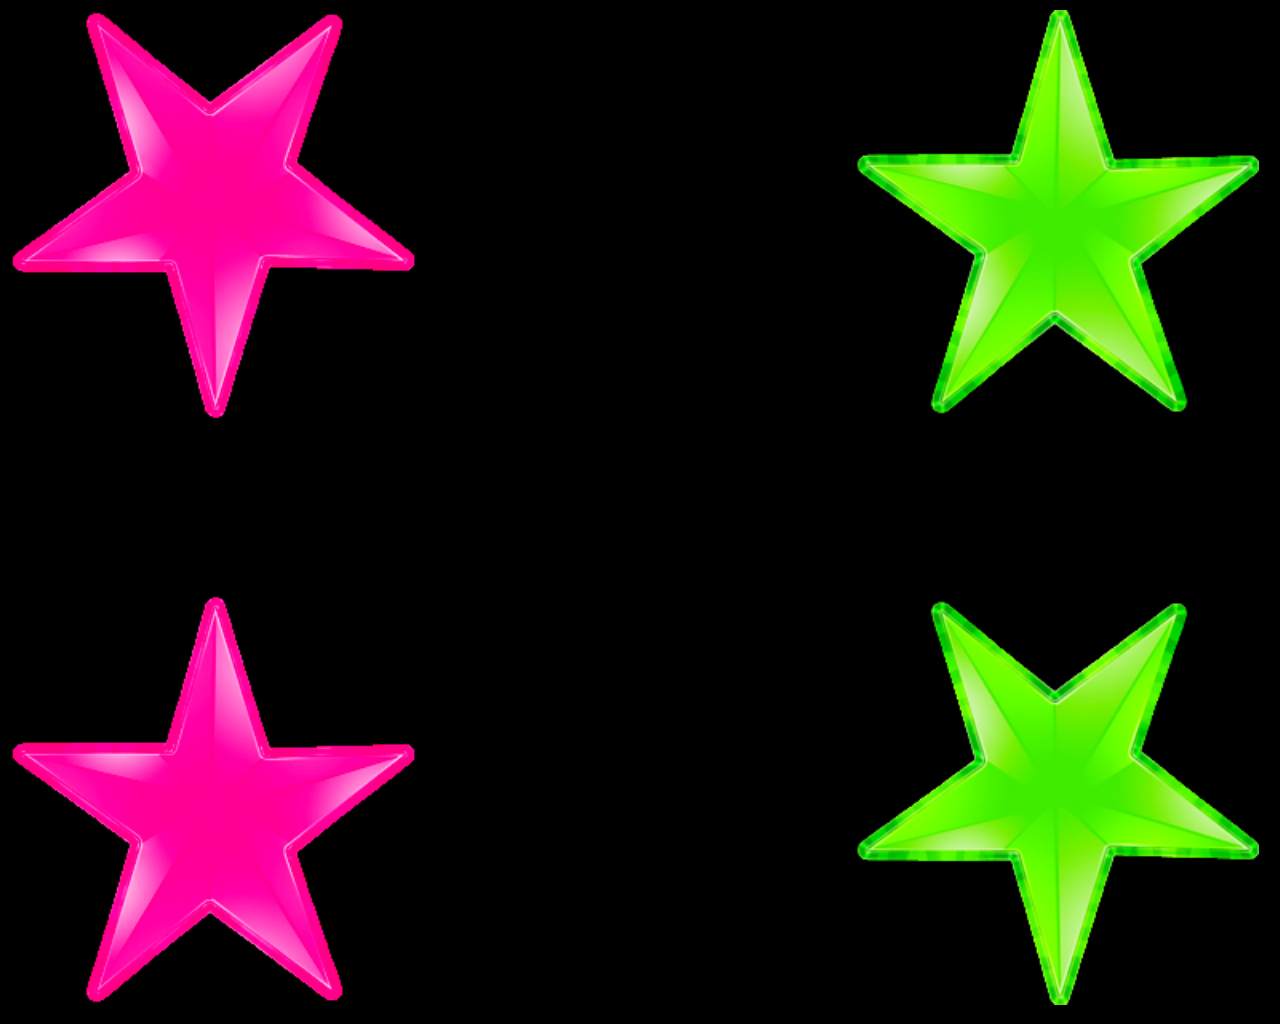 Neon stars clipart